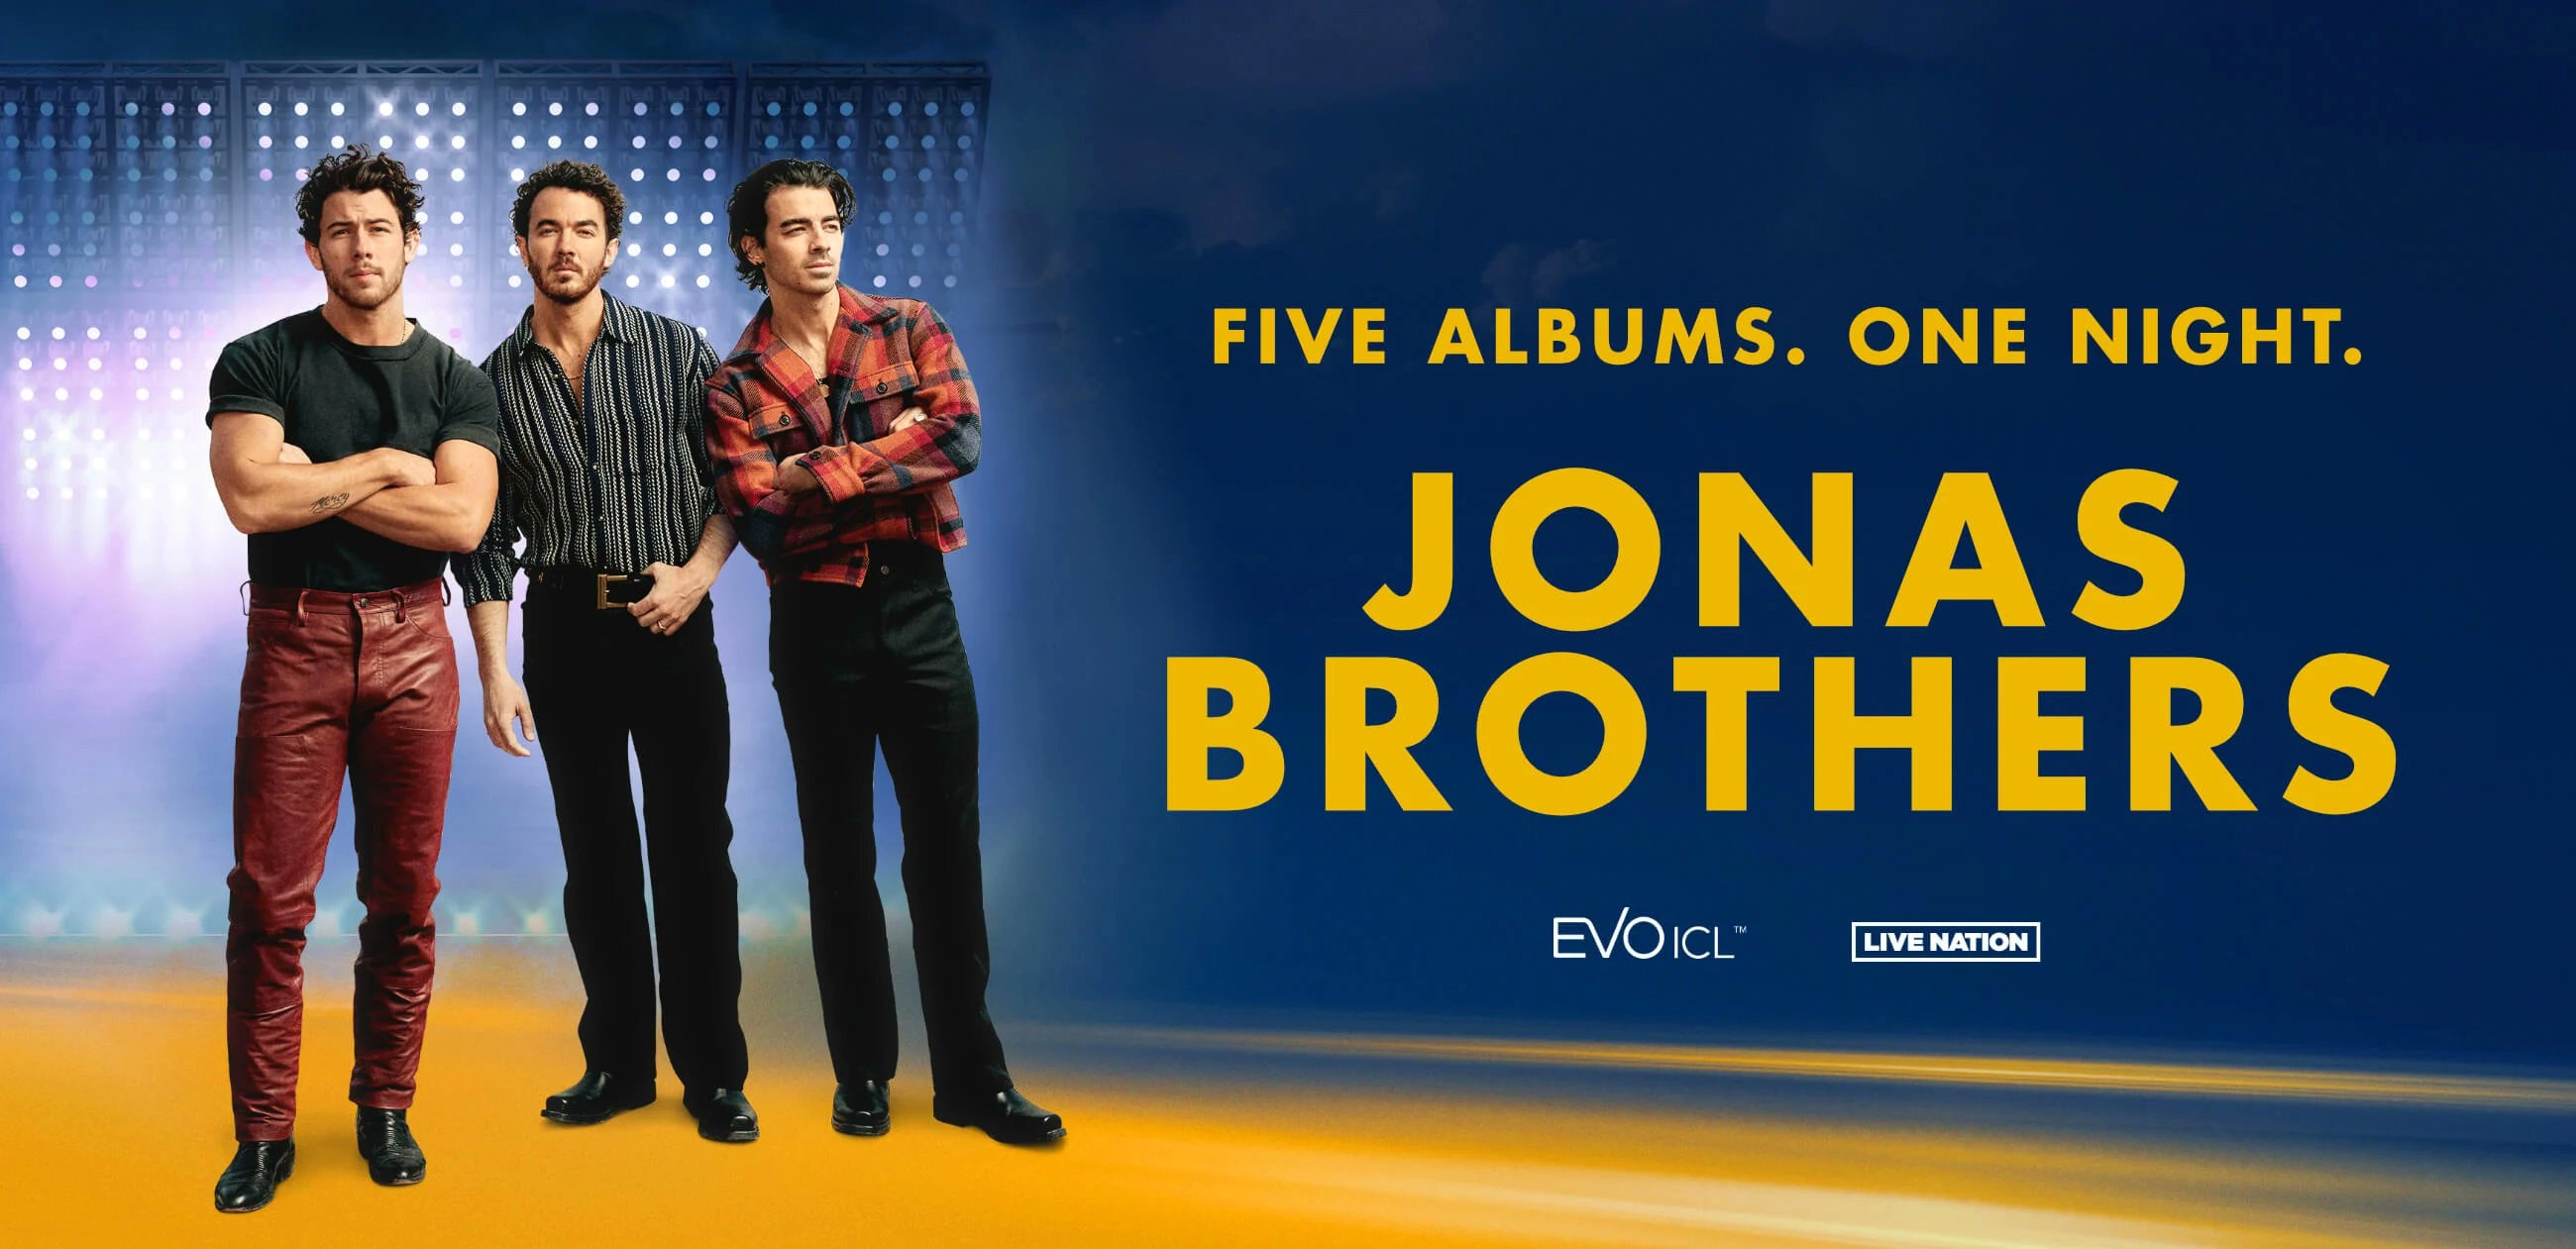 Jonas Brothers at Accor Arena Tickets